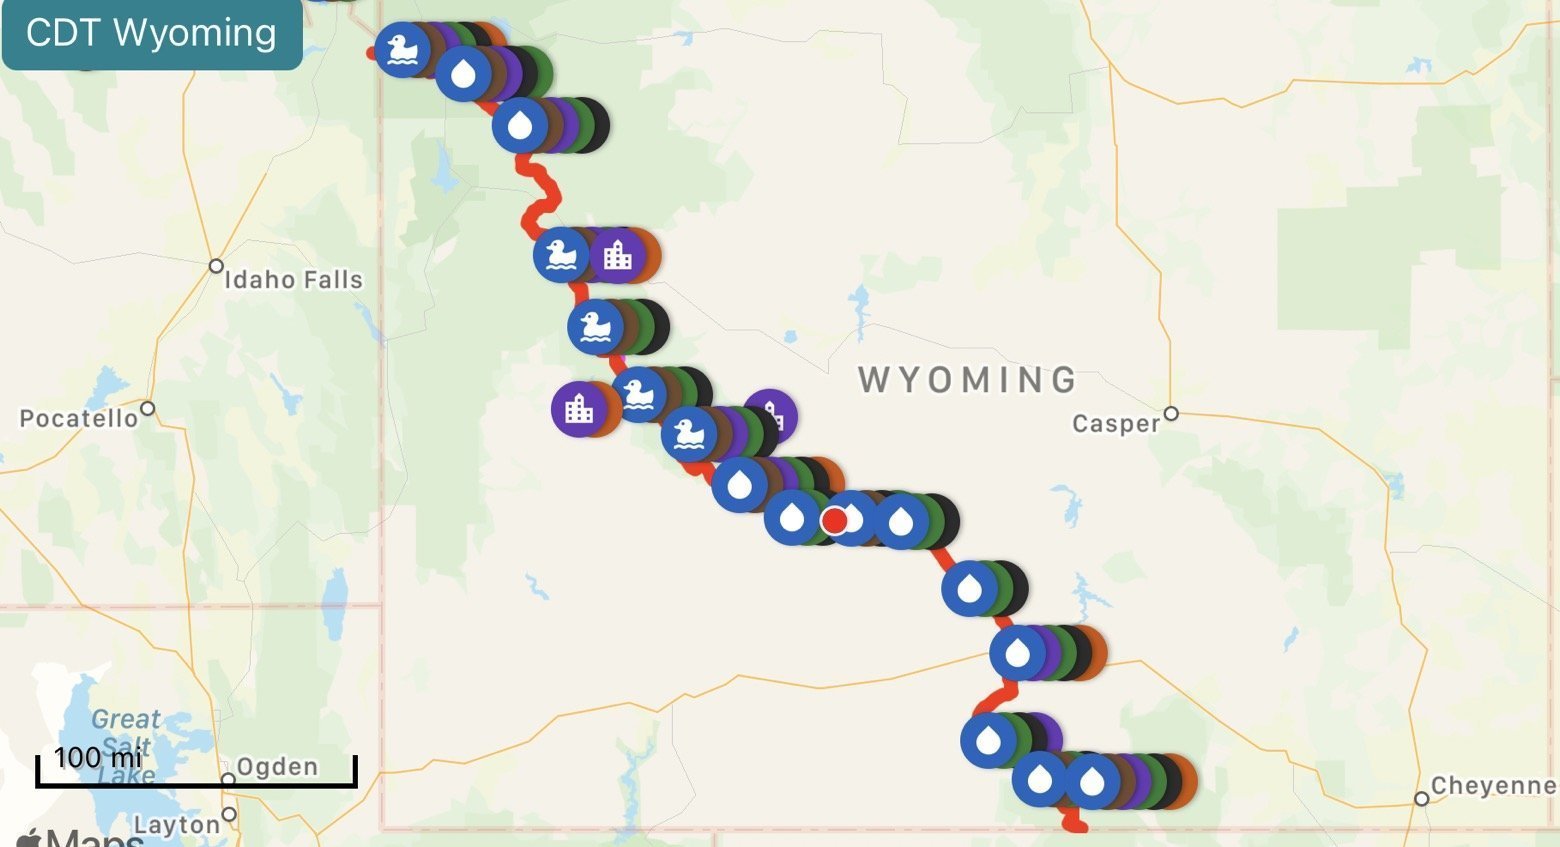 The Wyoming diagonal